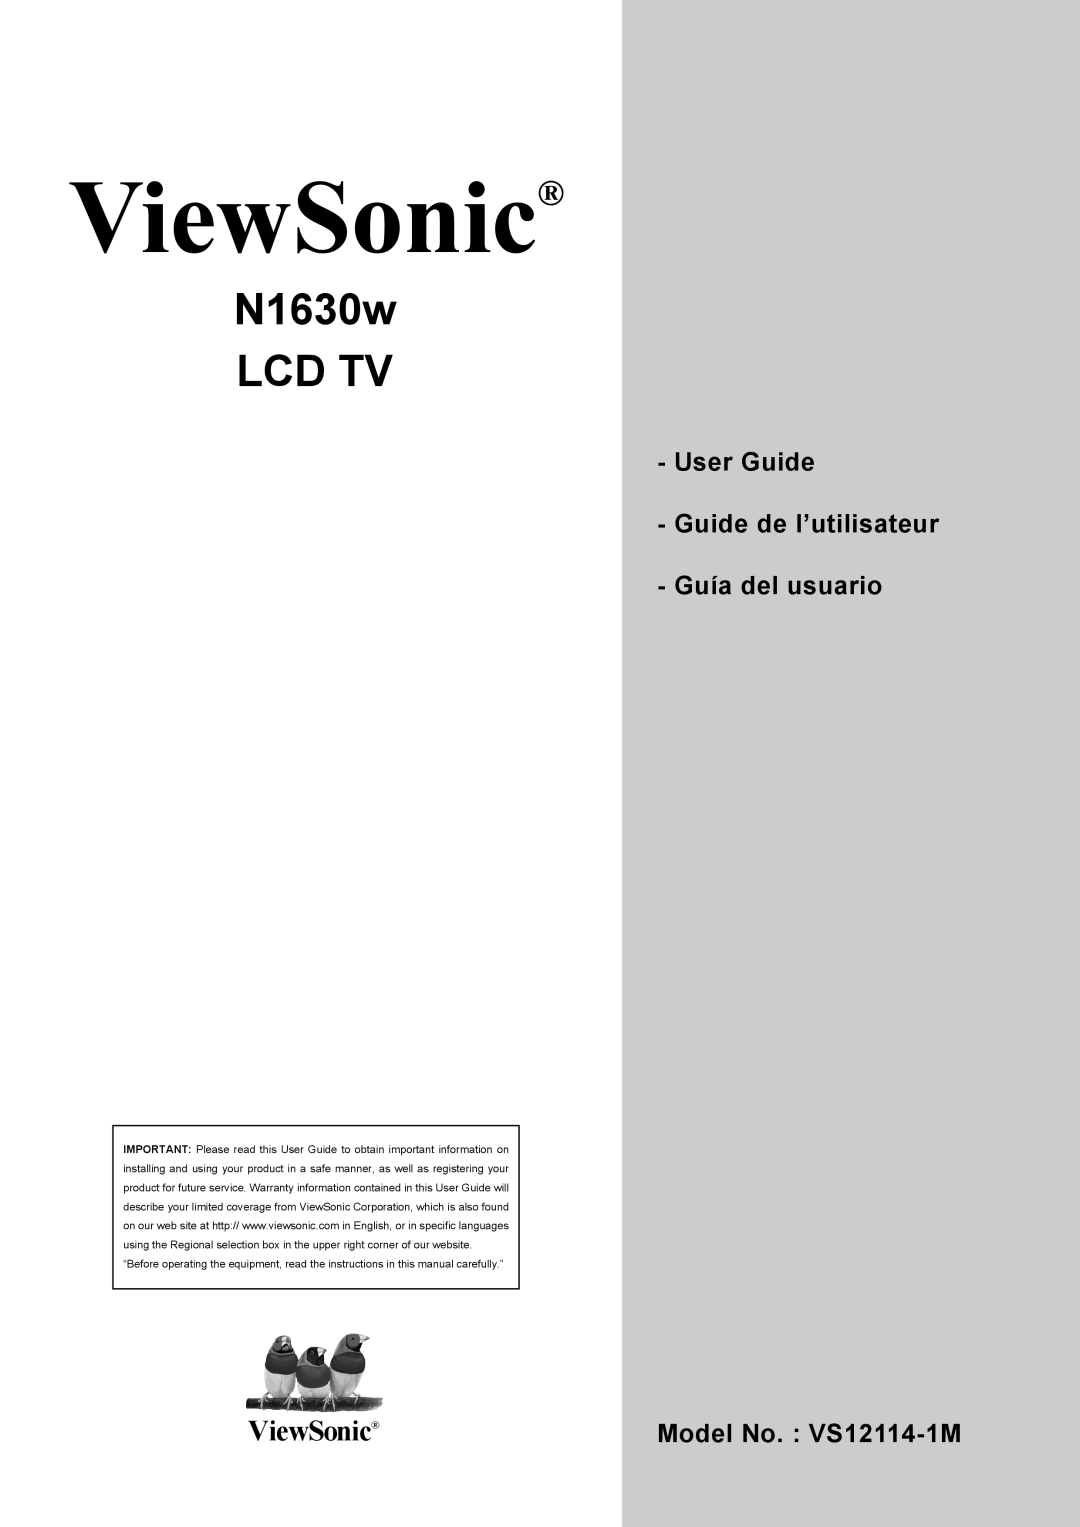 ViewSonic VS12114-1M warranty ViewSonic, N1630w LCD TV, User Guide Guide de l’utilisateur - Guía del usuario 